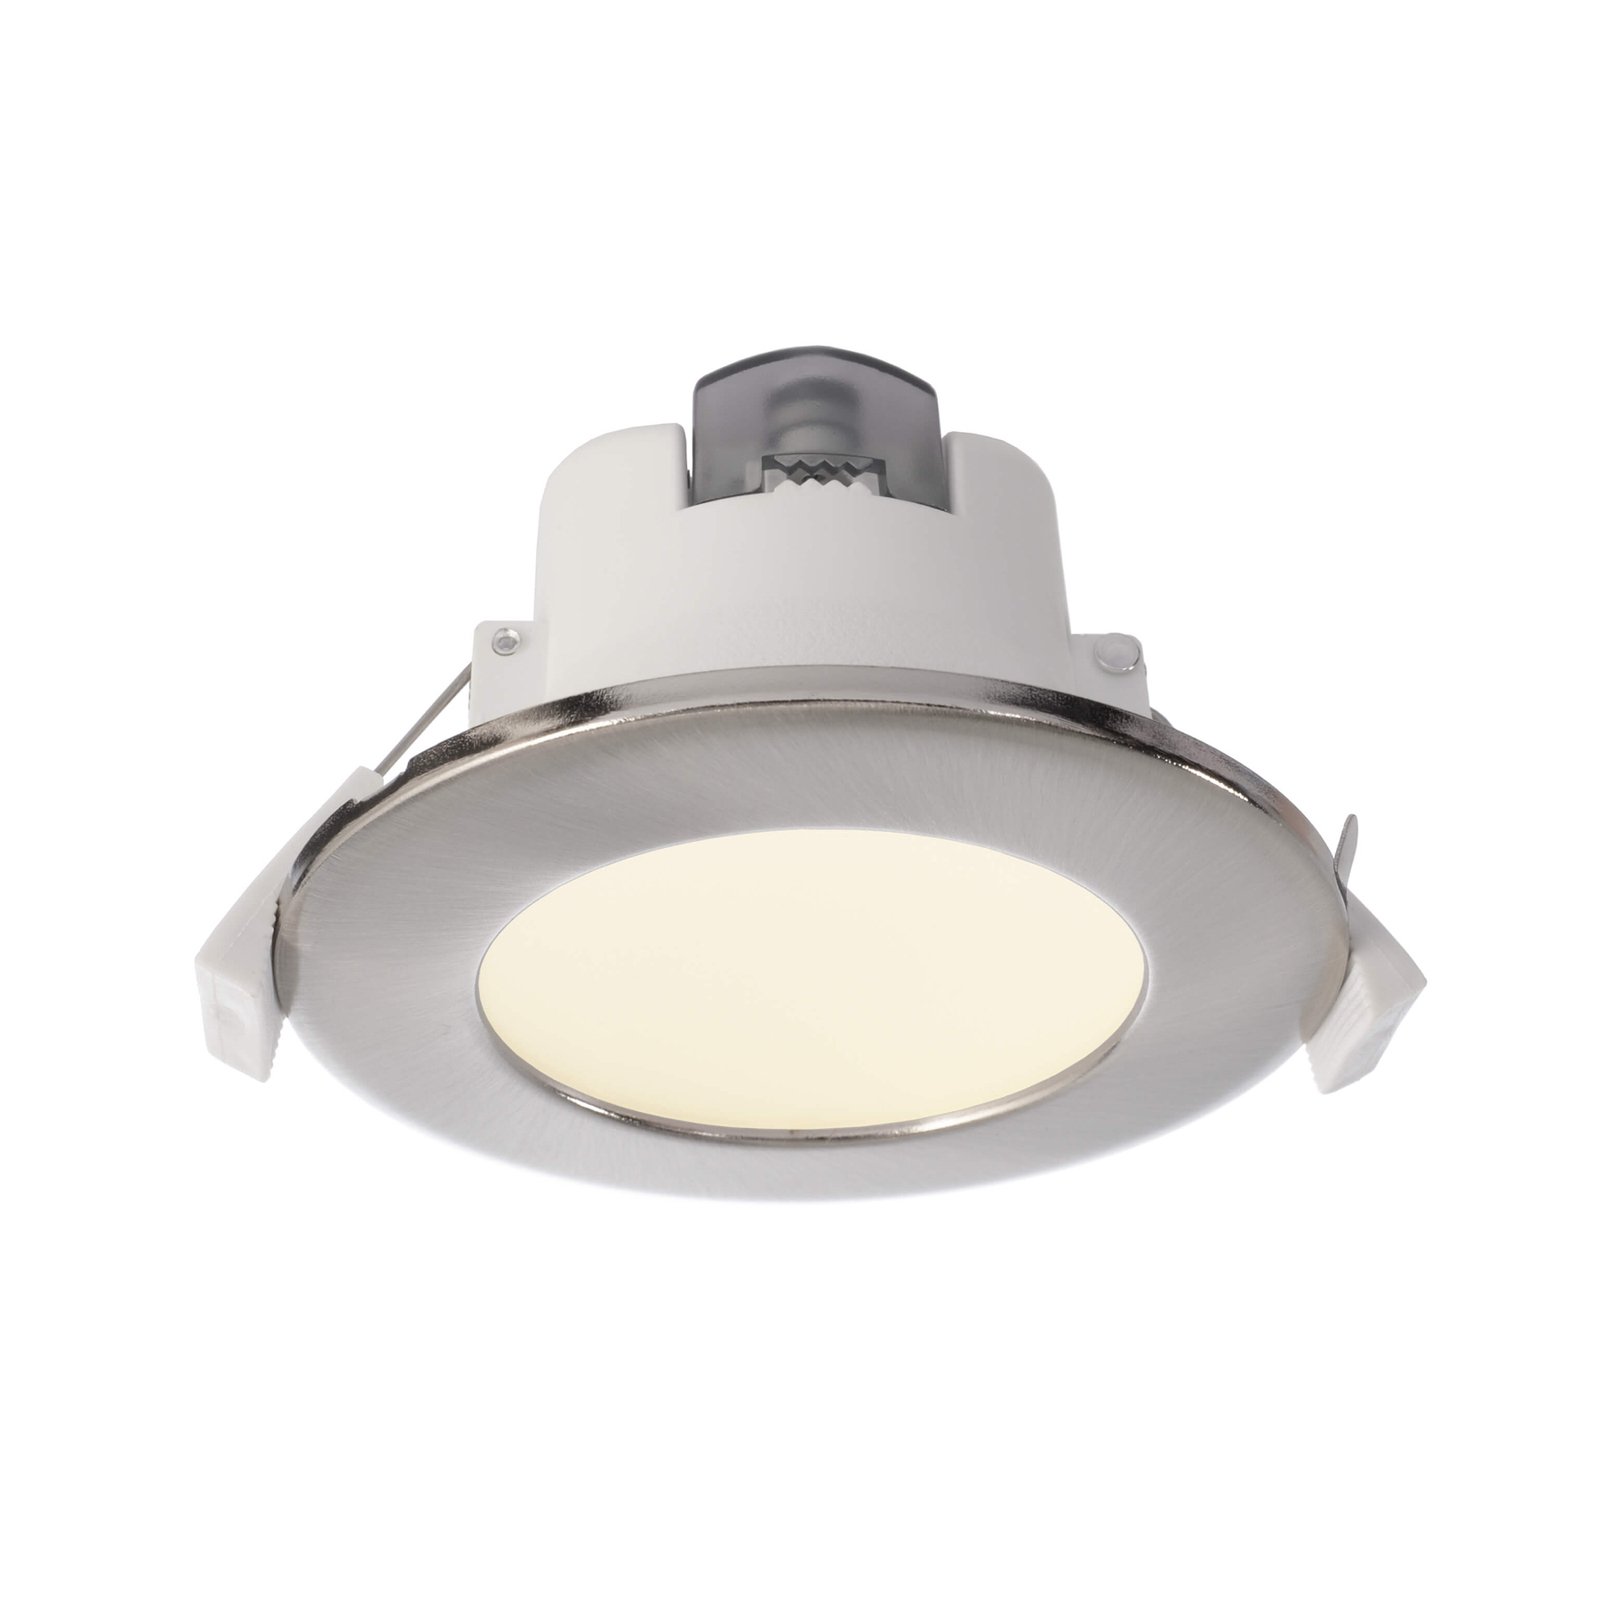 Acrux 68 LED indbygningslampe, hvid, Ø 9,5 cm